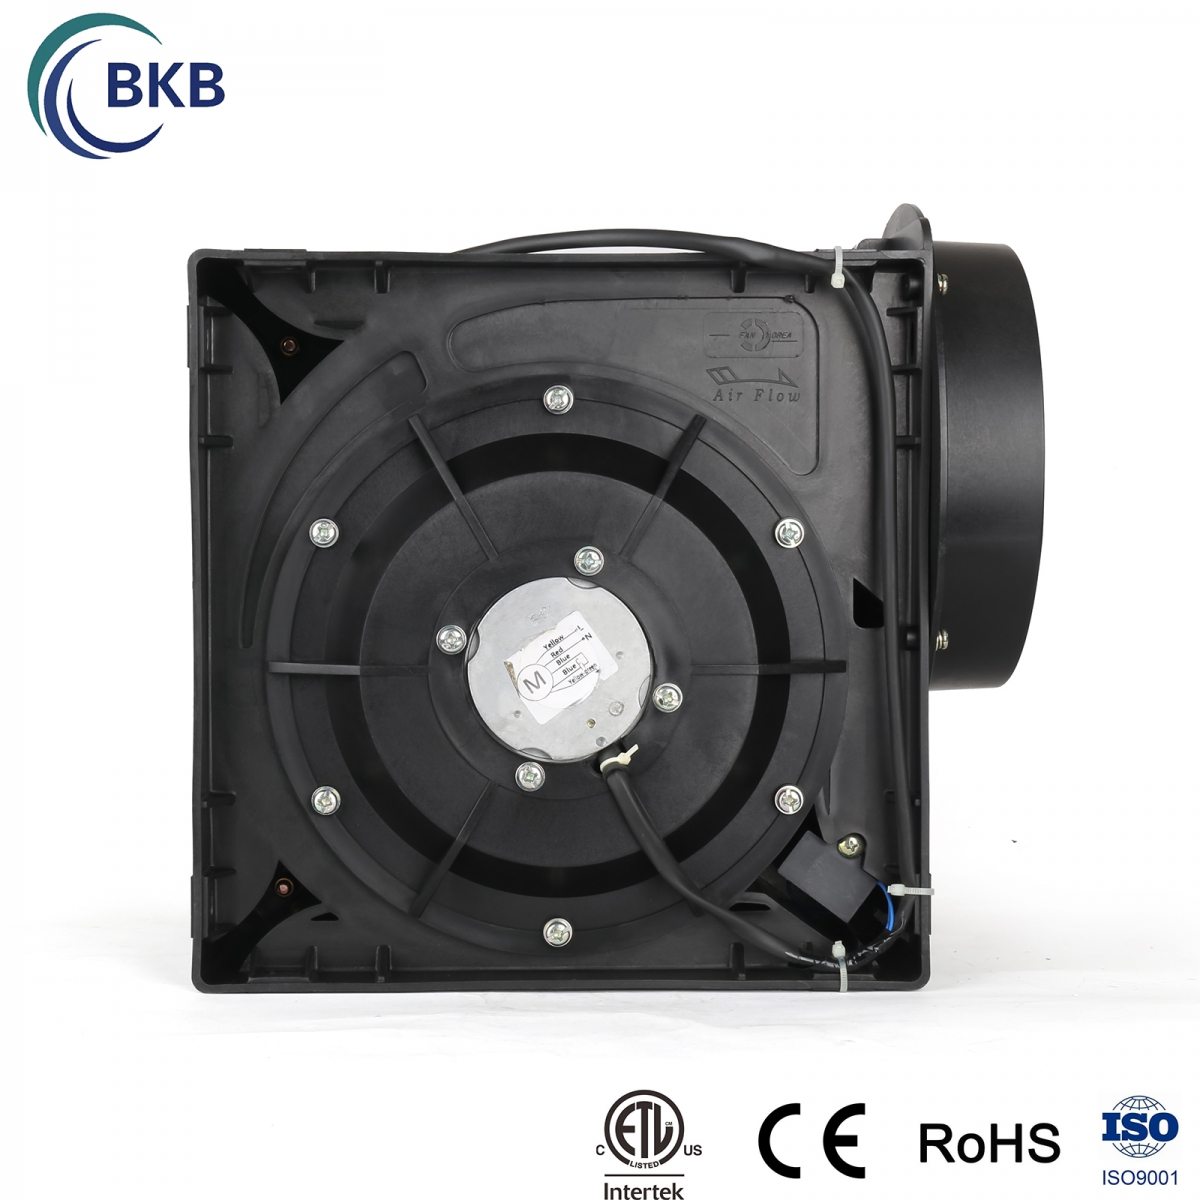 Rectangle centrifugal fan  BRO-4E185-SUNLIGHT BLOWER,Centrifugal Fans, Inline Fans,Motors,Backward curved centrifugal fans ,Forward curved centrifugal fans ,inlet fans, EC fans